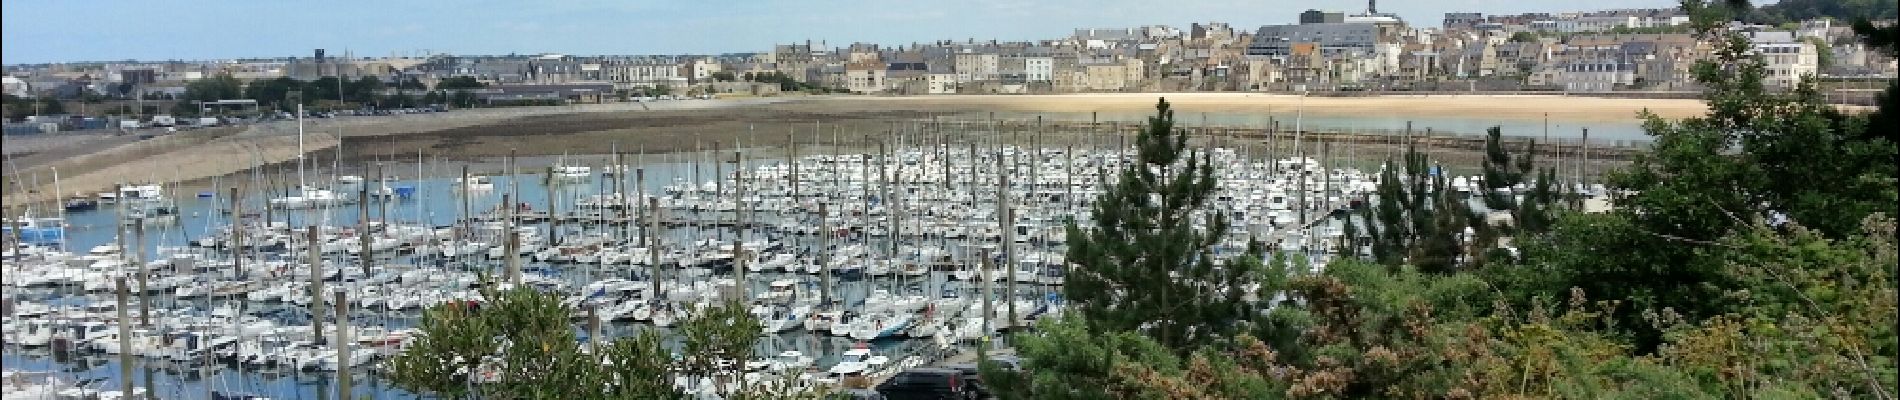 Tocht Stappen Saint-Malo - St-Servan-sur-Mer - 2.5km 60m 50mn - 2017 06 24 - Photo